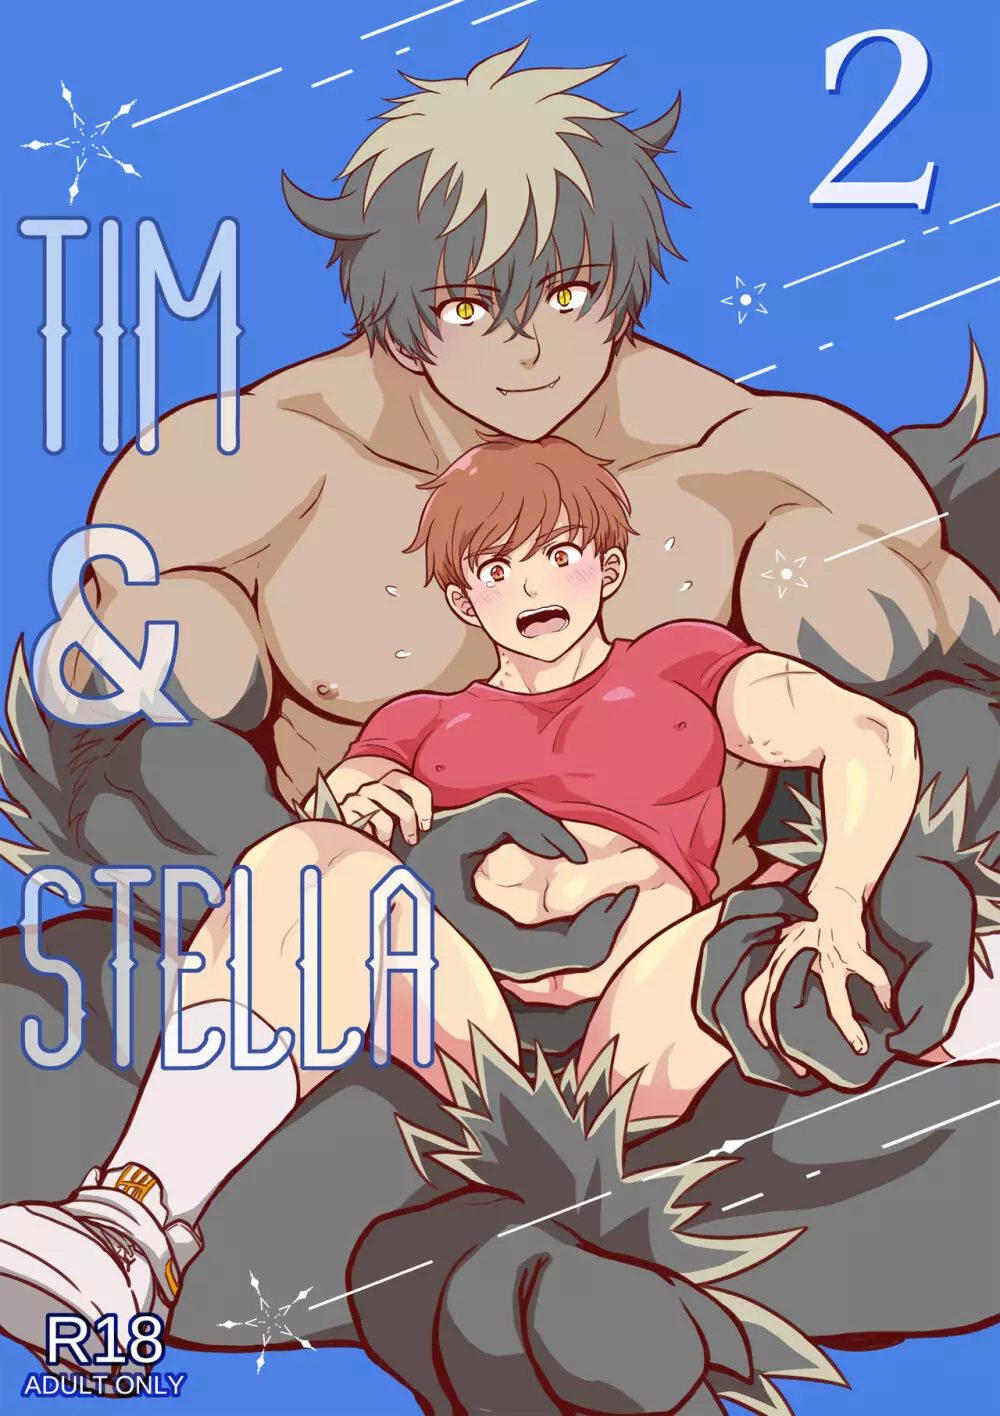 Tim & Stella 2